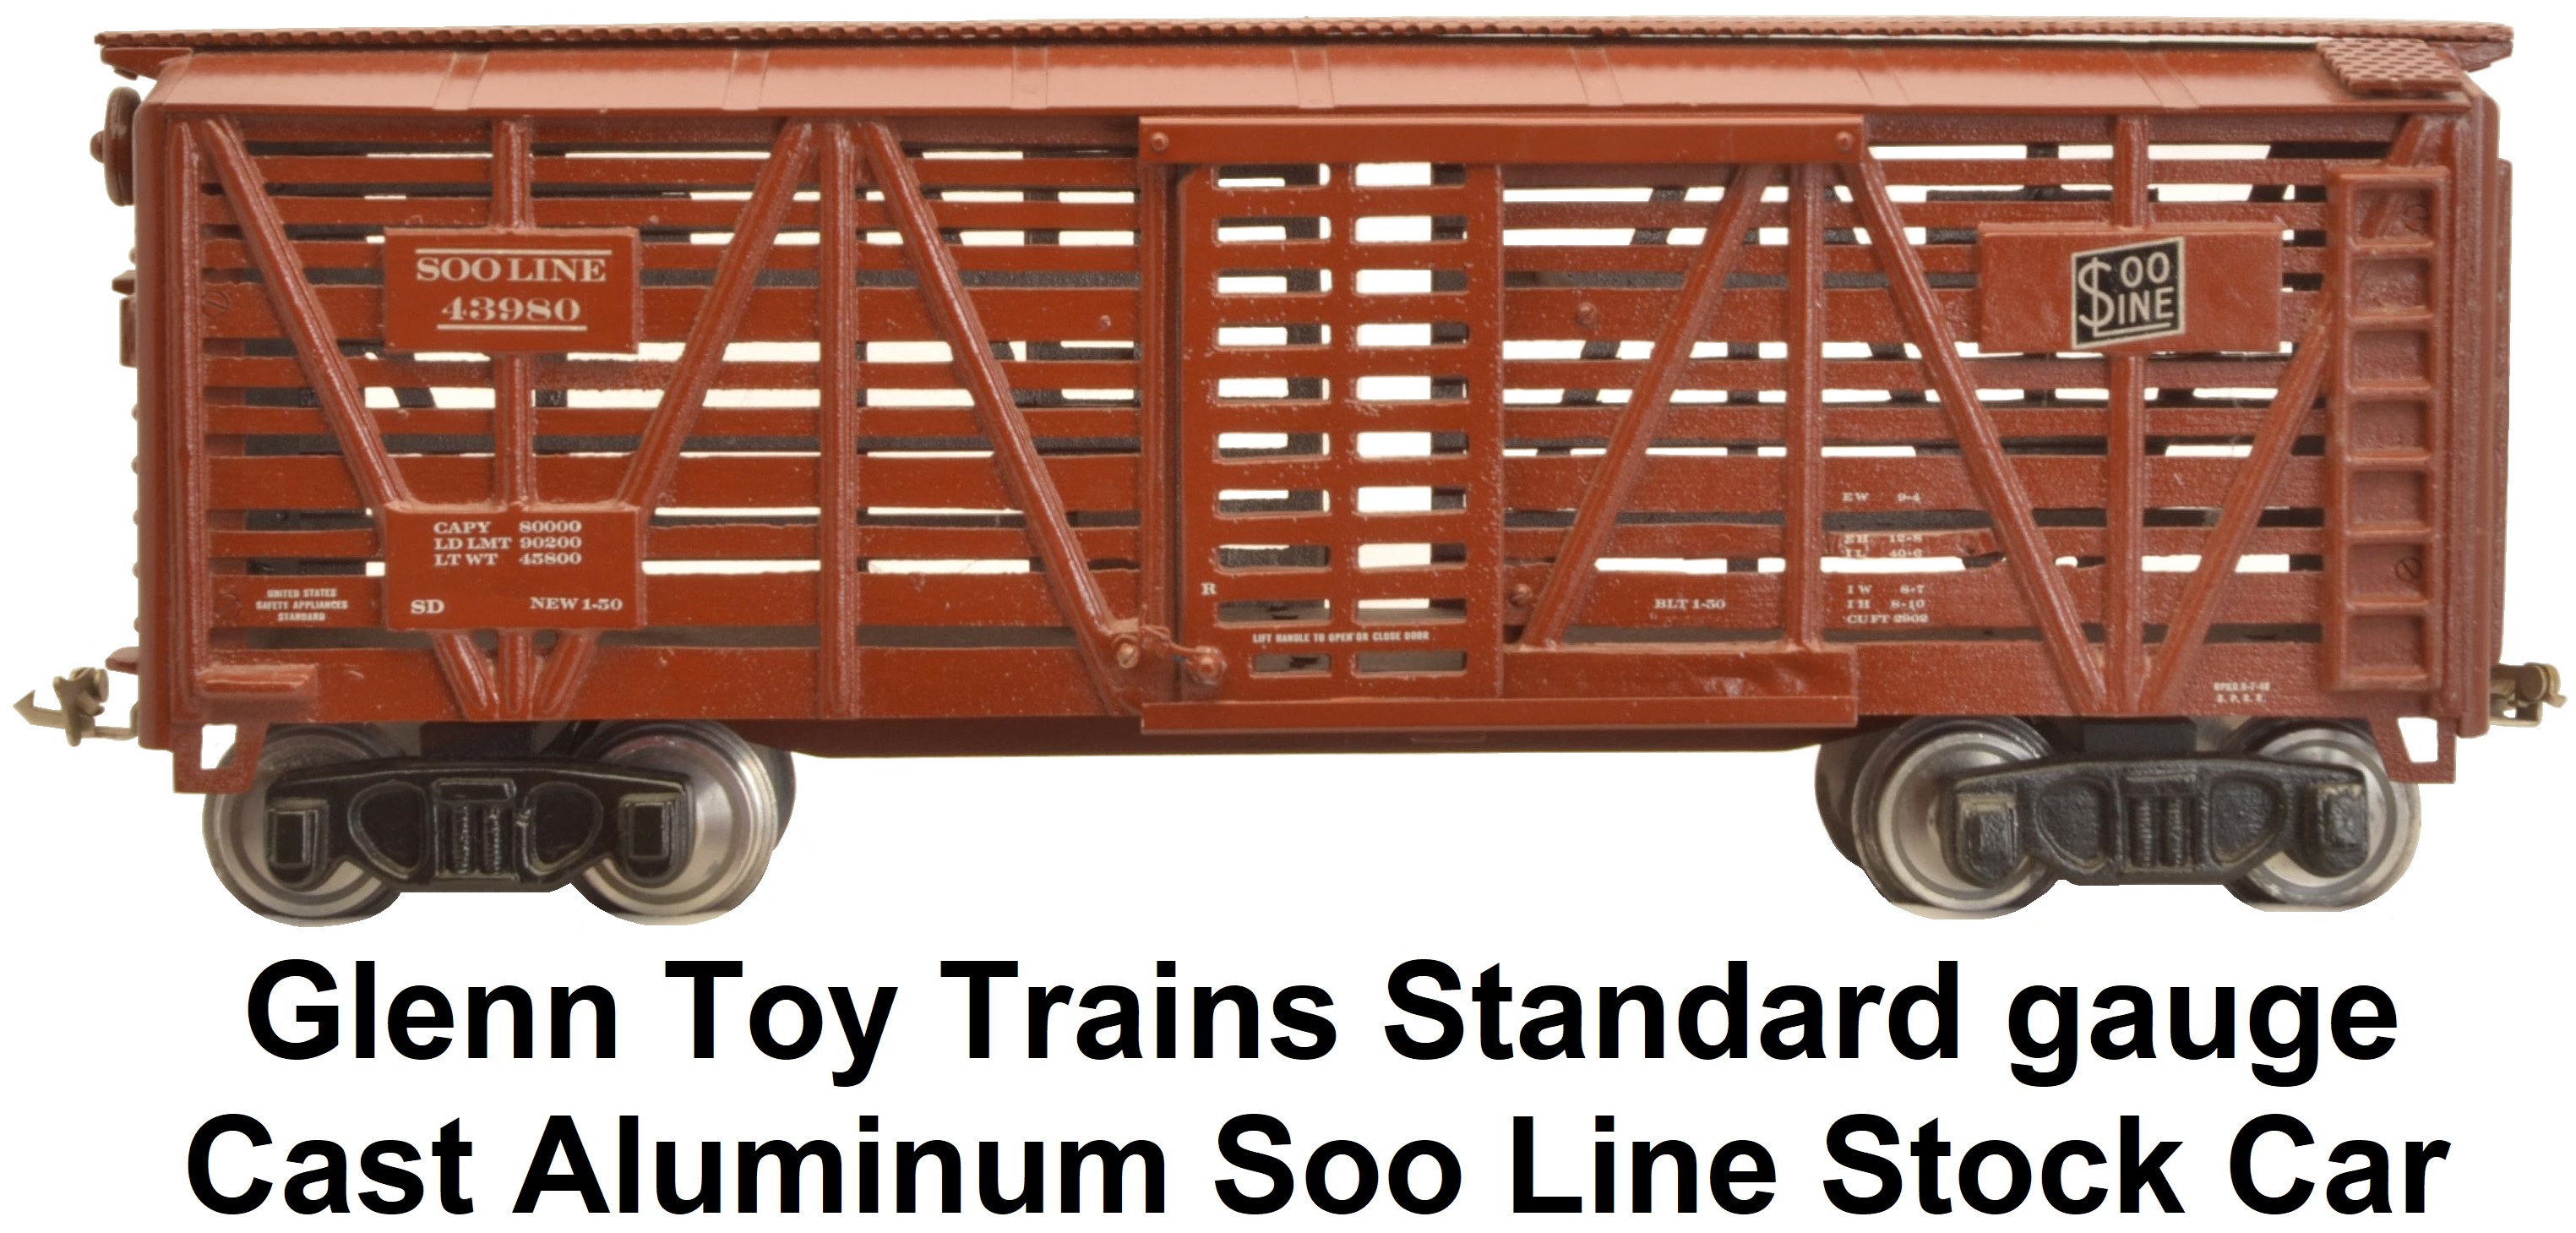 Glenn Toy Trains Standard gauge Soo Line Cast Aluminum Stock Car Numbered 43980